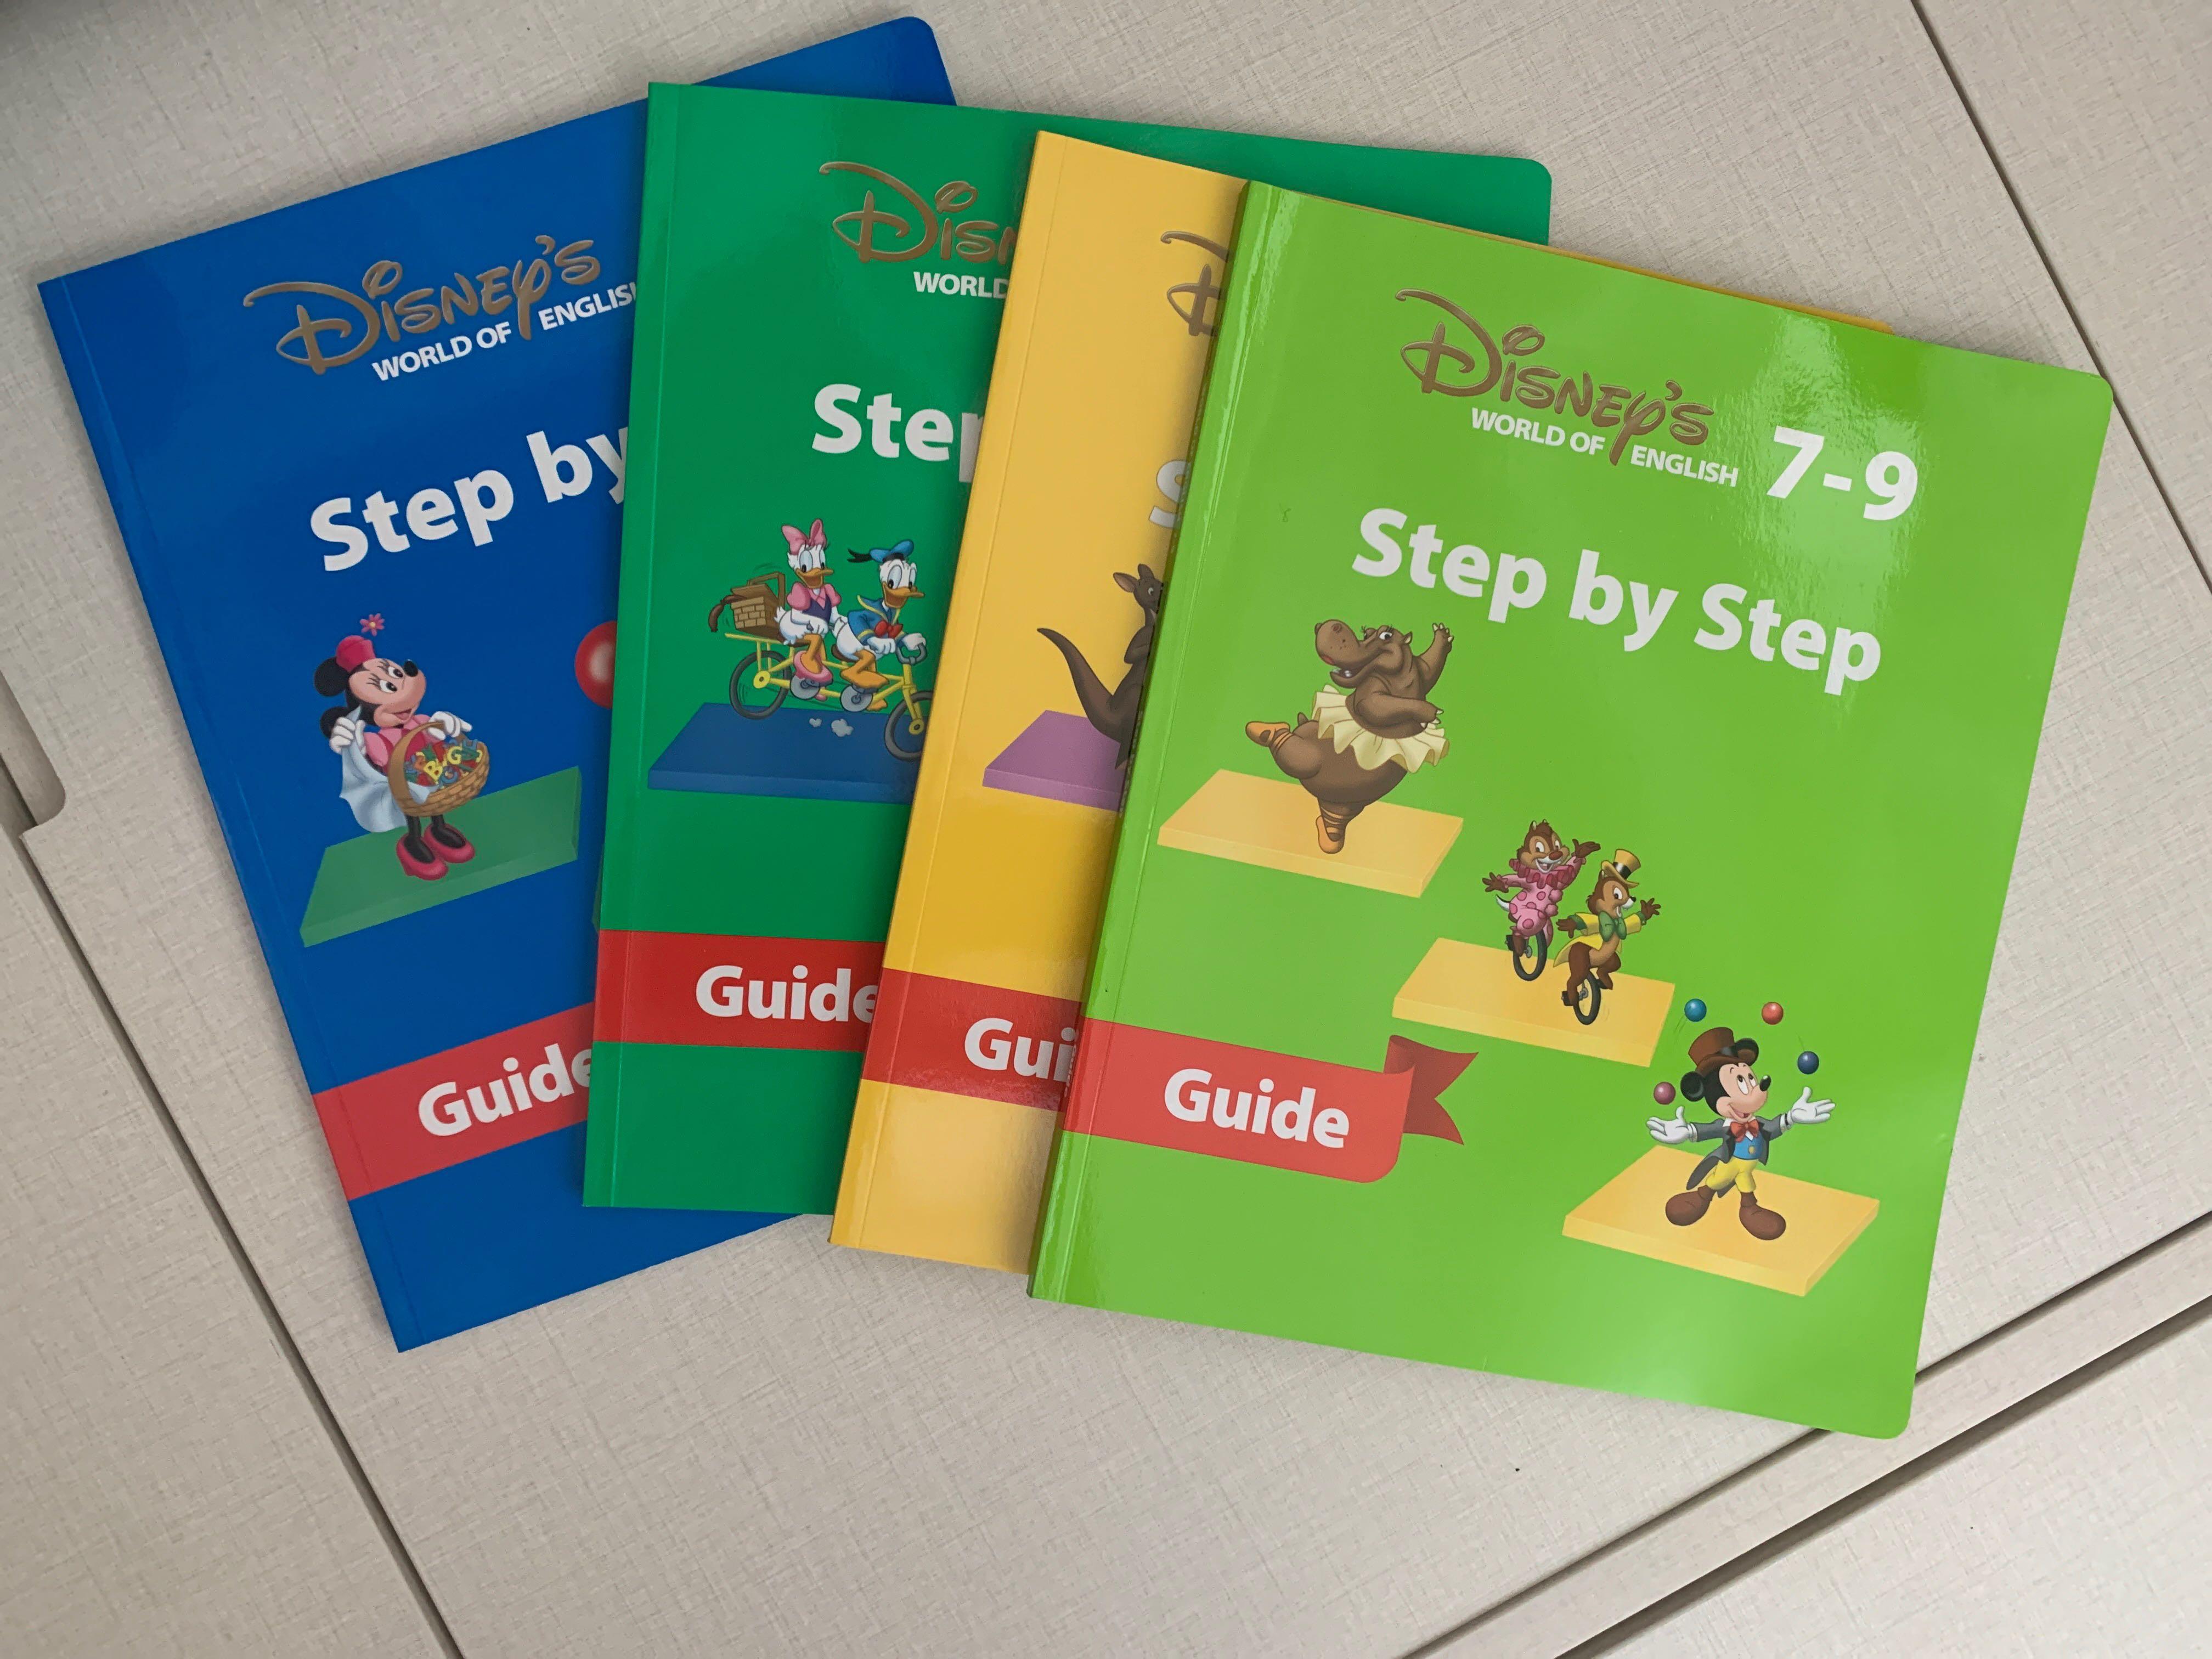 Disney world of English - Step by Step 迪士尼美語世界, 兒童＆孕婦